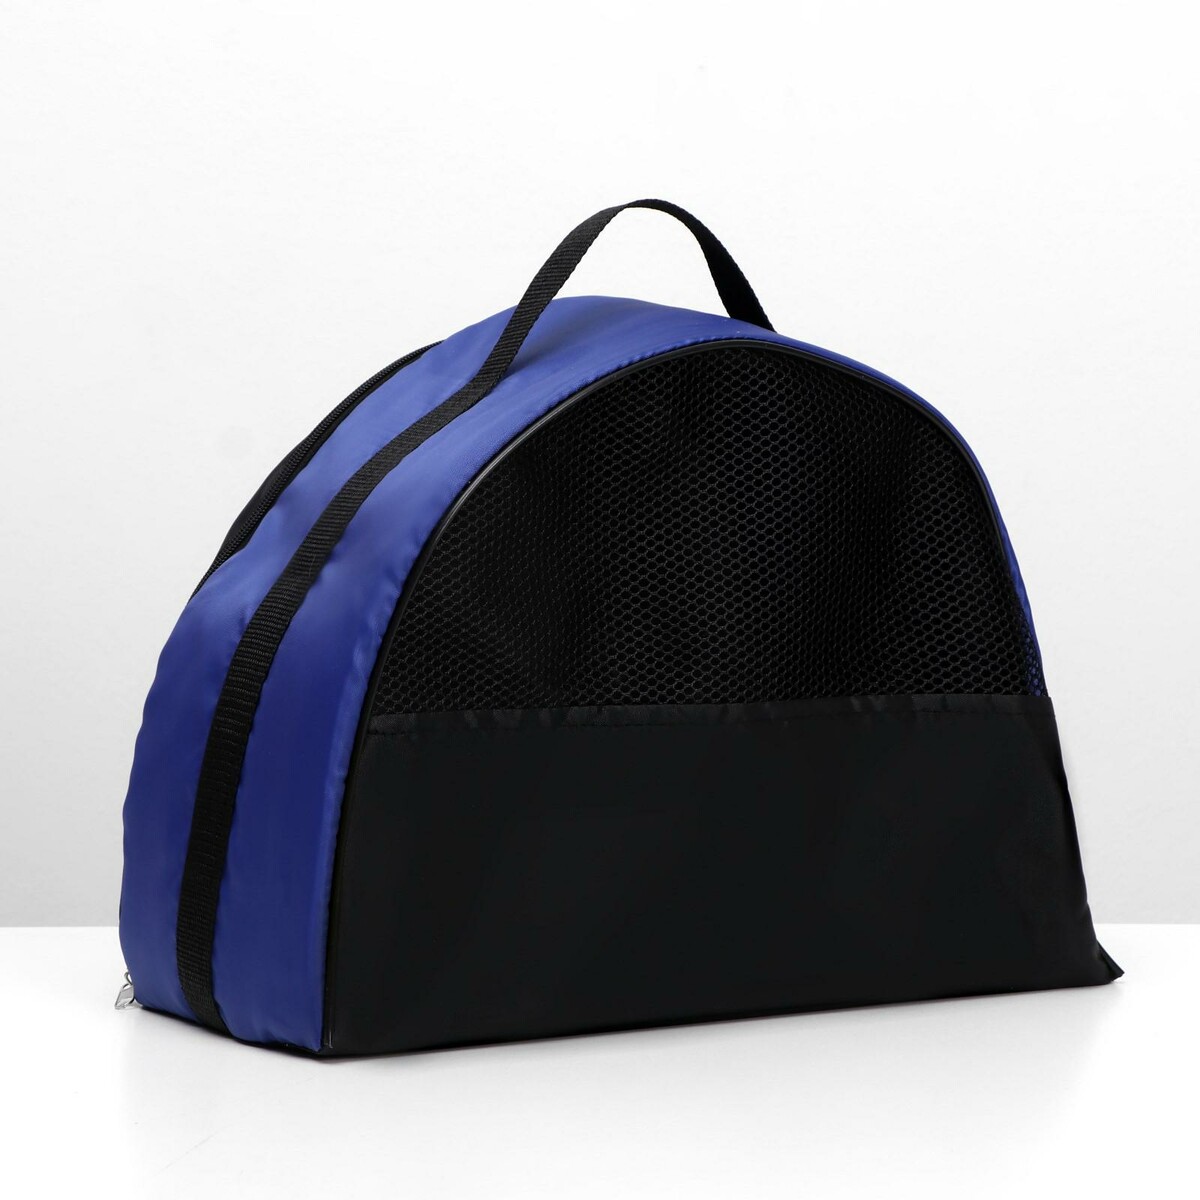 Сумка - переноска для животных, оксфорд, 39 х 19 х 27 см, синяя сумка переноска для животных оксфорд 39 х 19 х 27 см фиолетовая